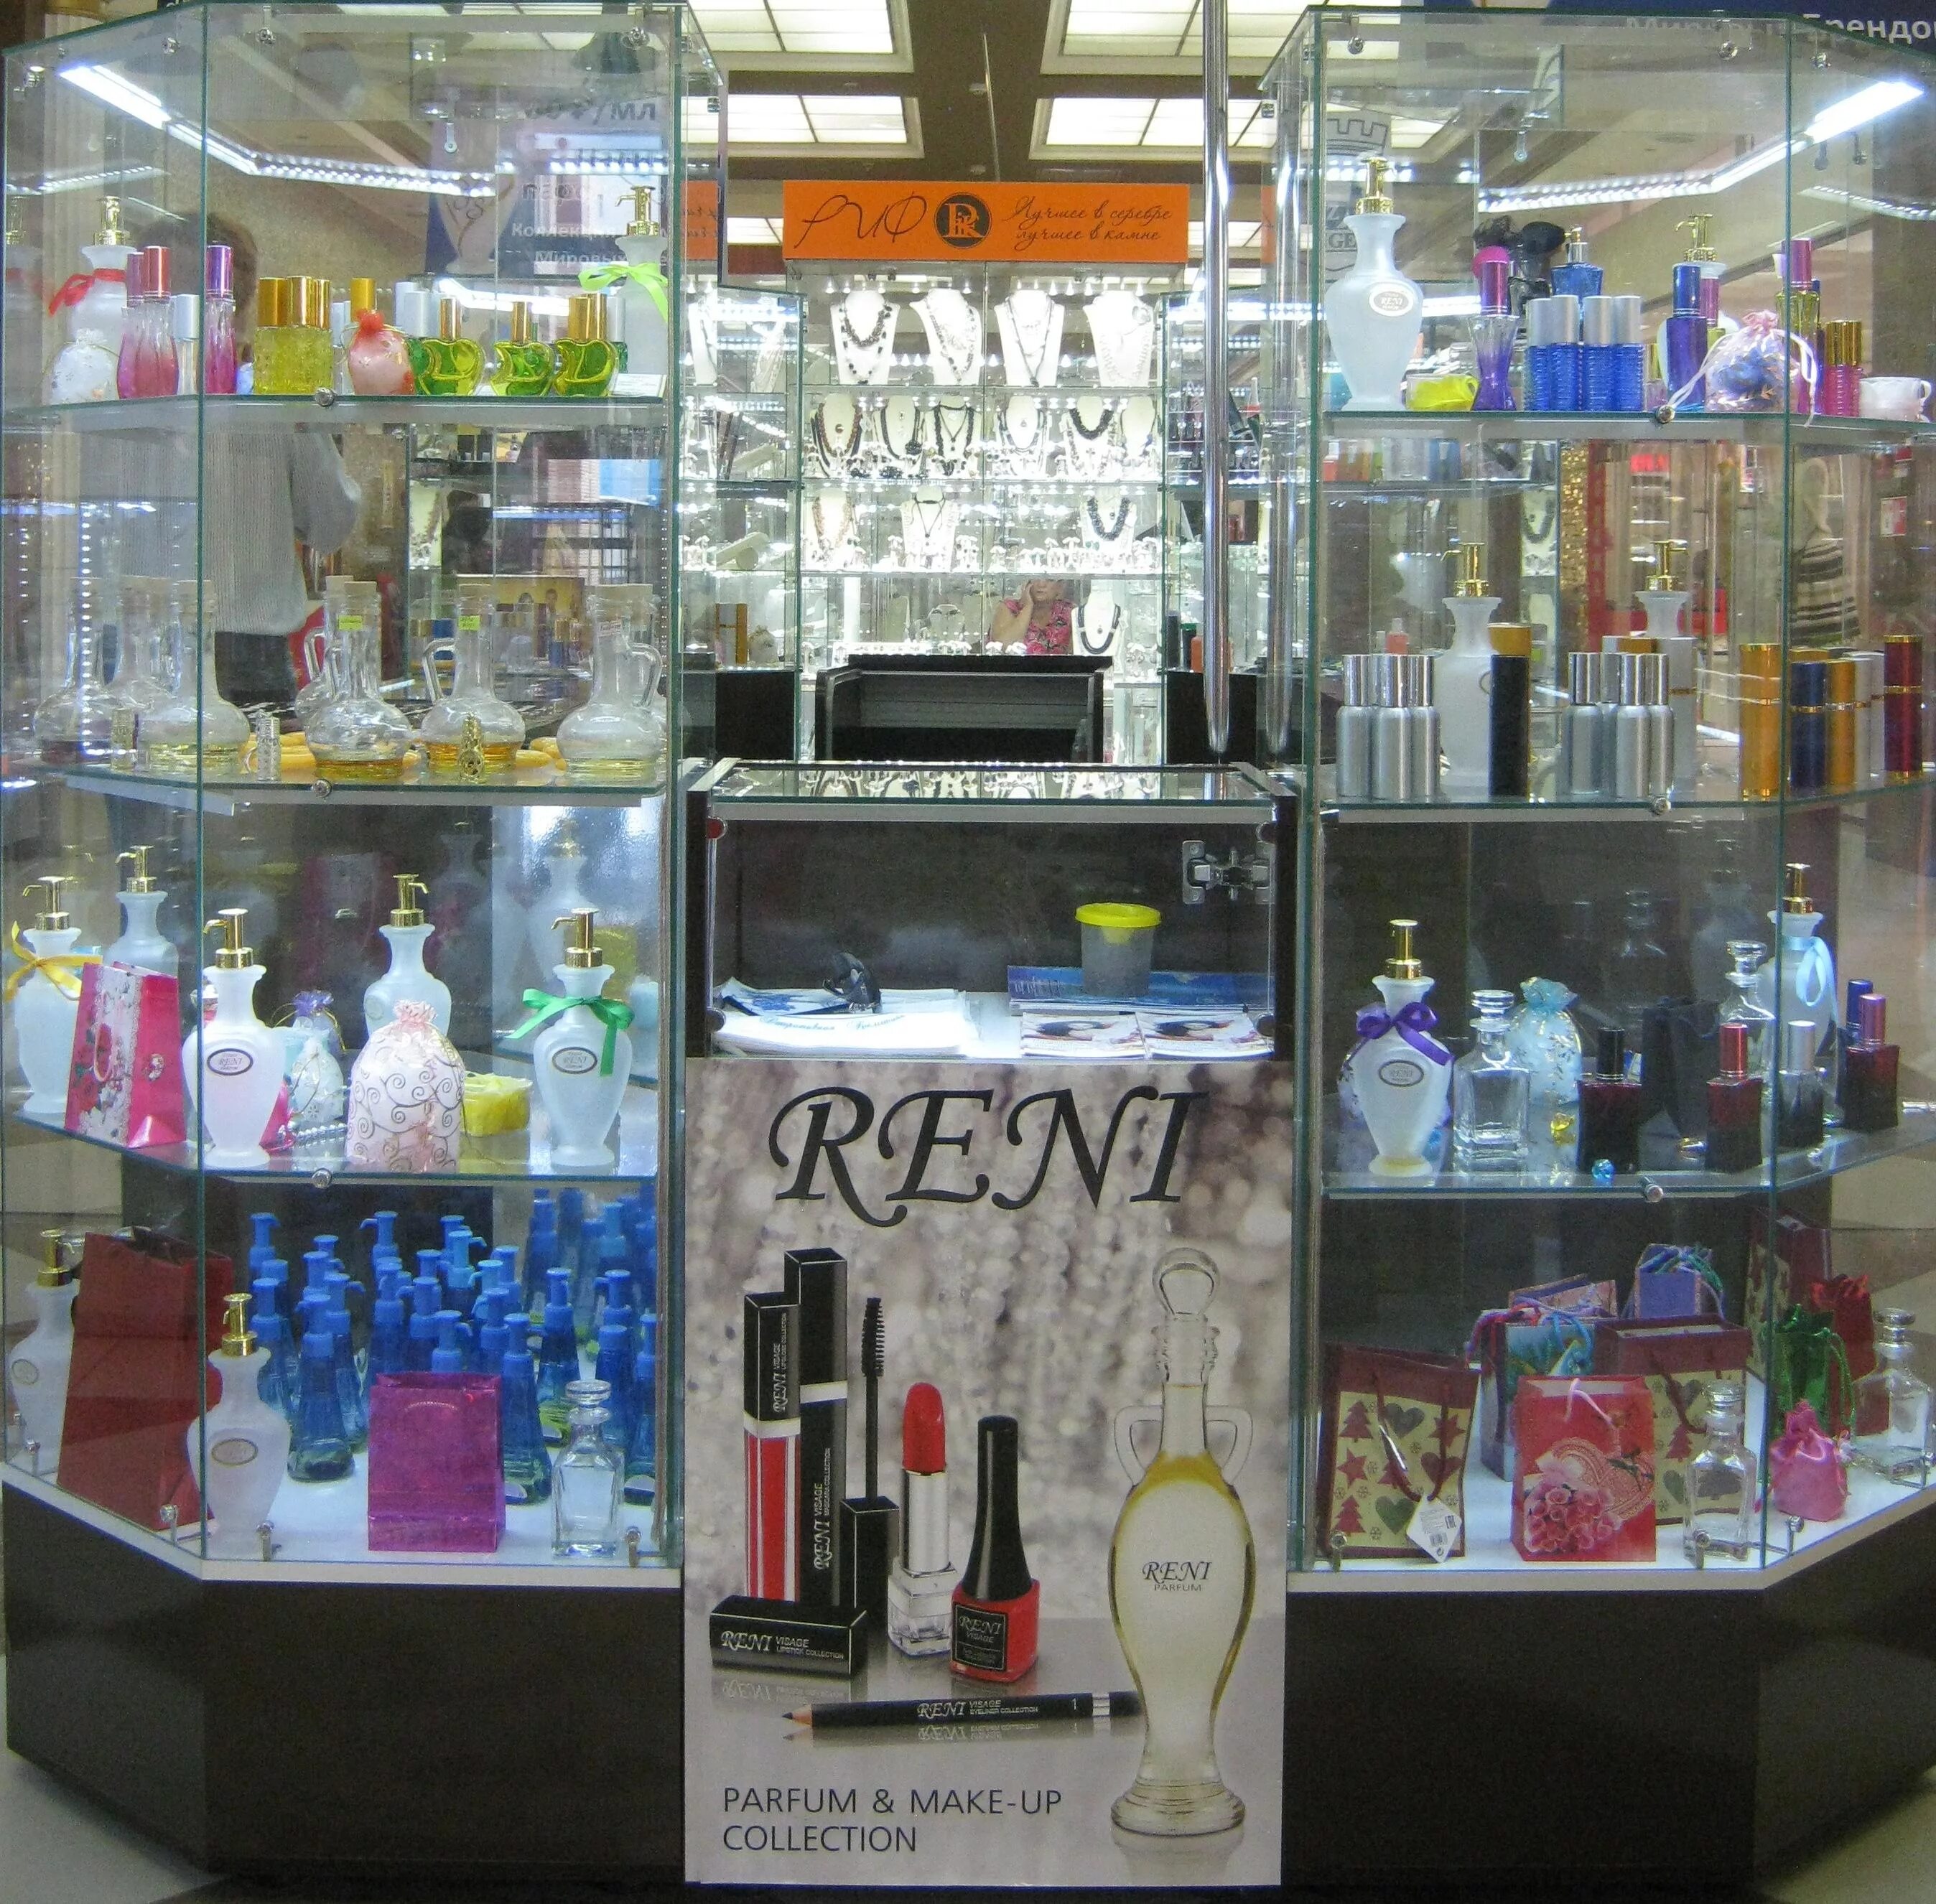 Reni наливная парфюмерия магазин. Магазин наливной парфюмерии. Магазин разливной парфюмерии. Витрина для парфюмерии на разлив.